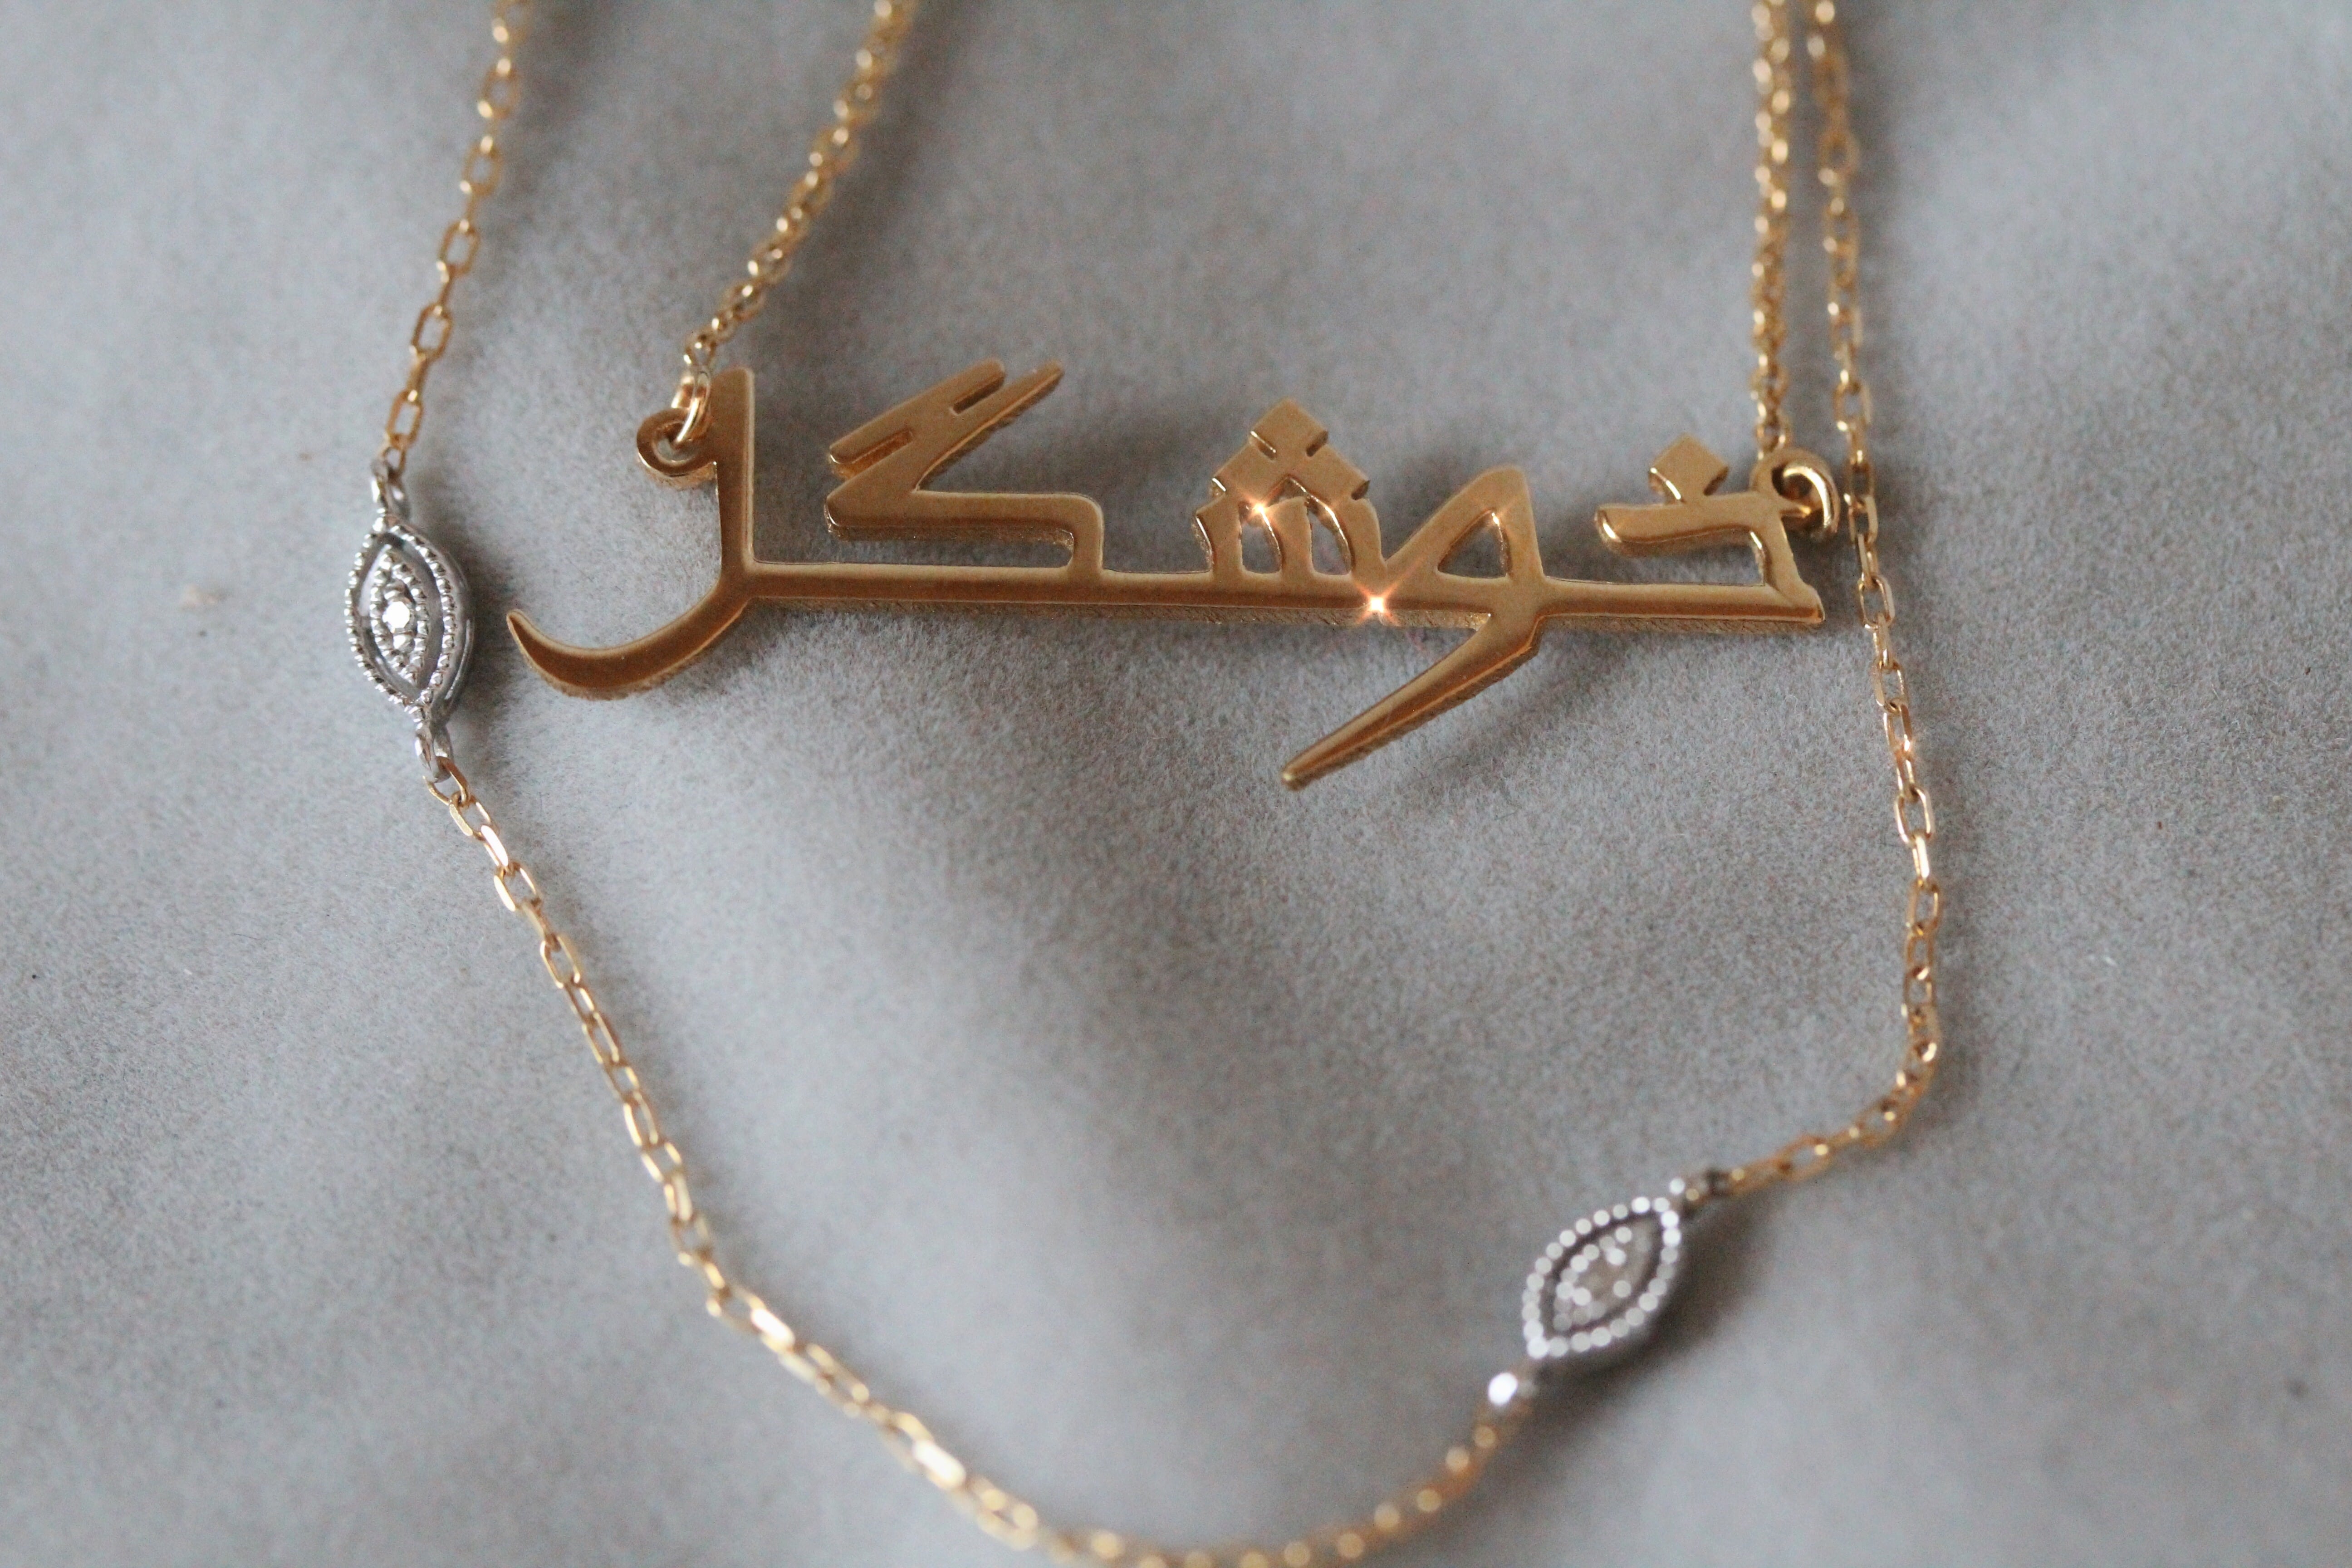 Beautiful BLOCK Calligraphy Persian or Arabic Name Necklace "Khoshgel"